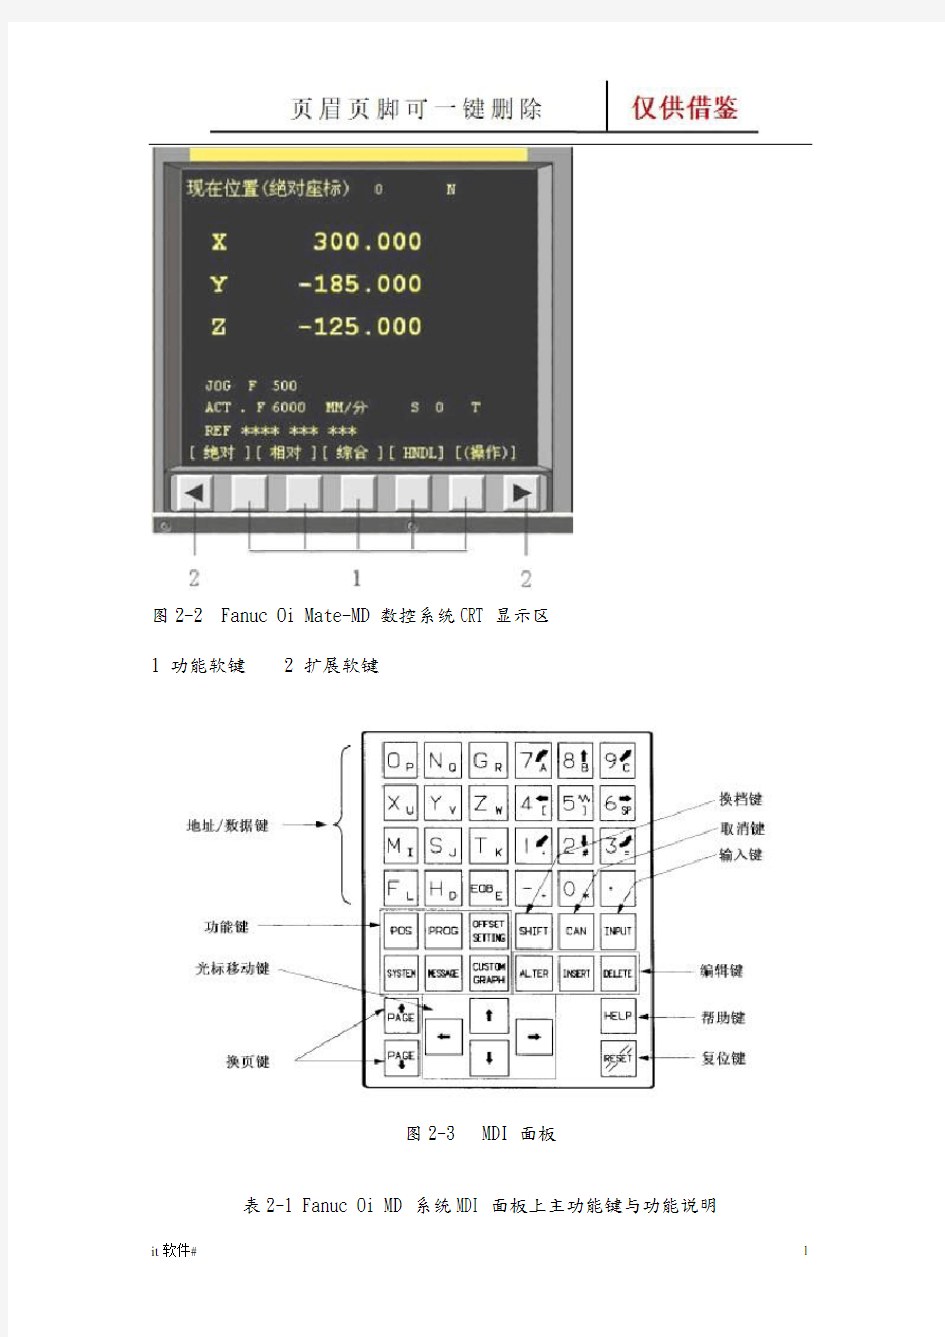 FANUC-Series-0i-MD数控铣床面板操作和对刀(谷风软件)